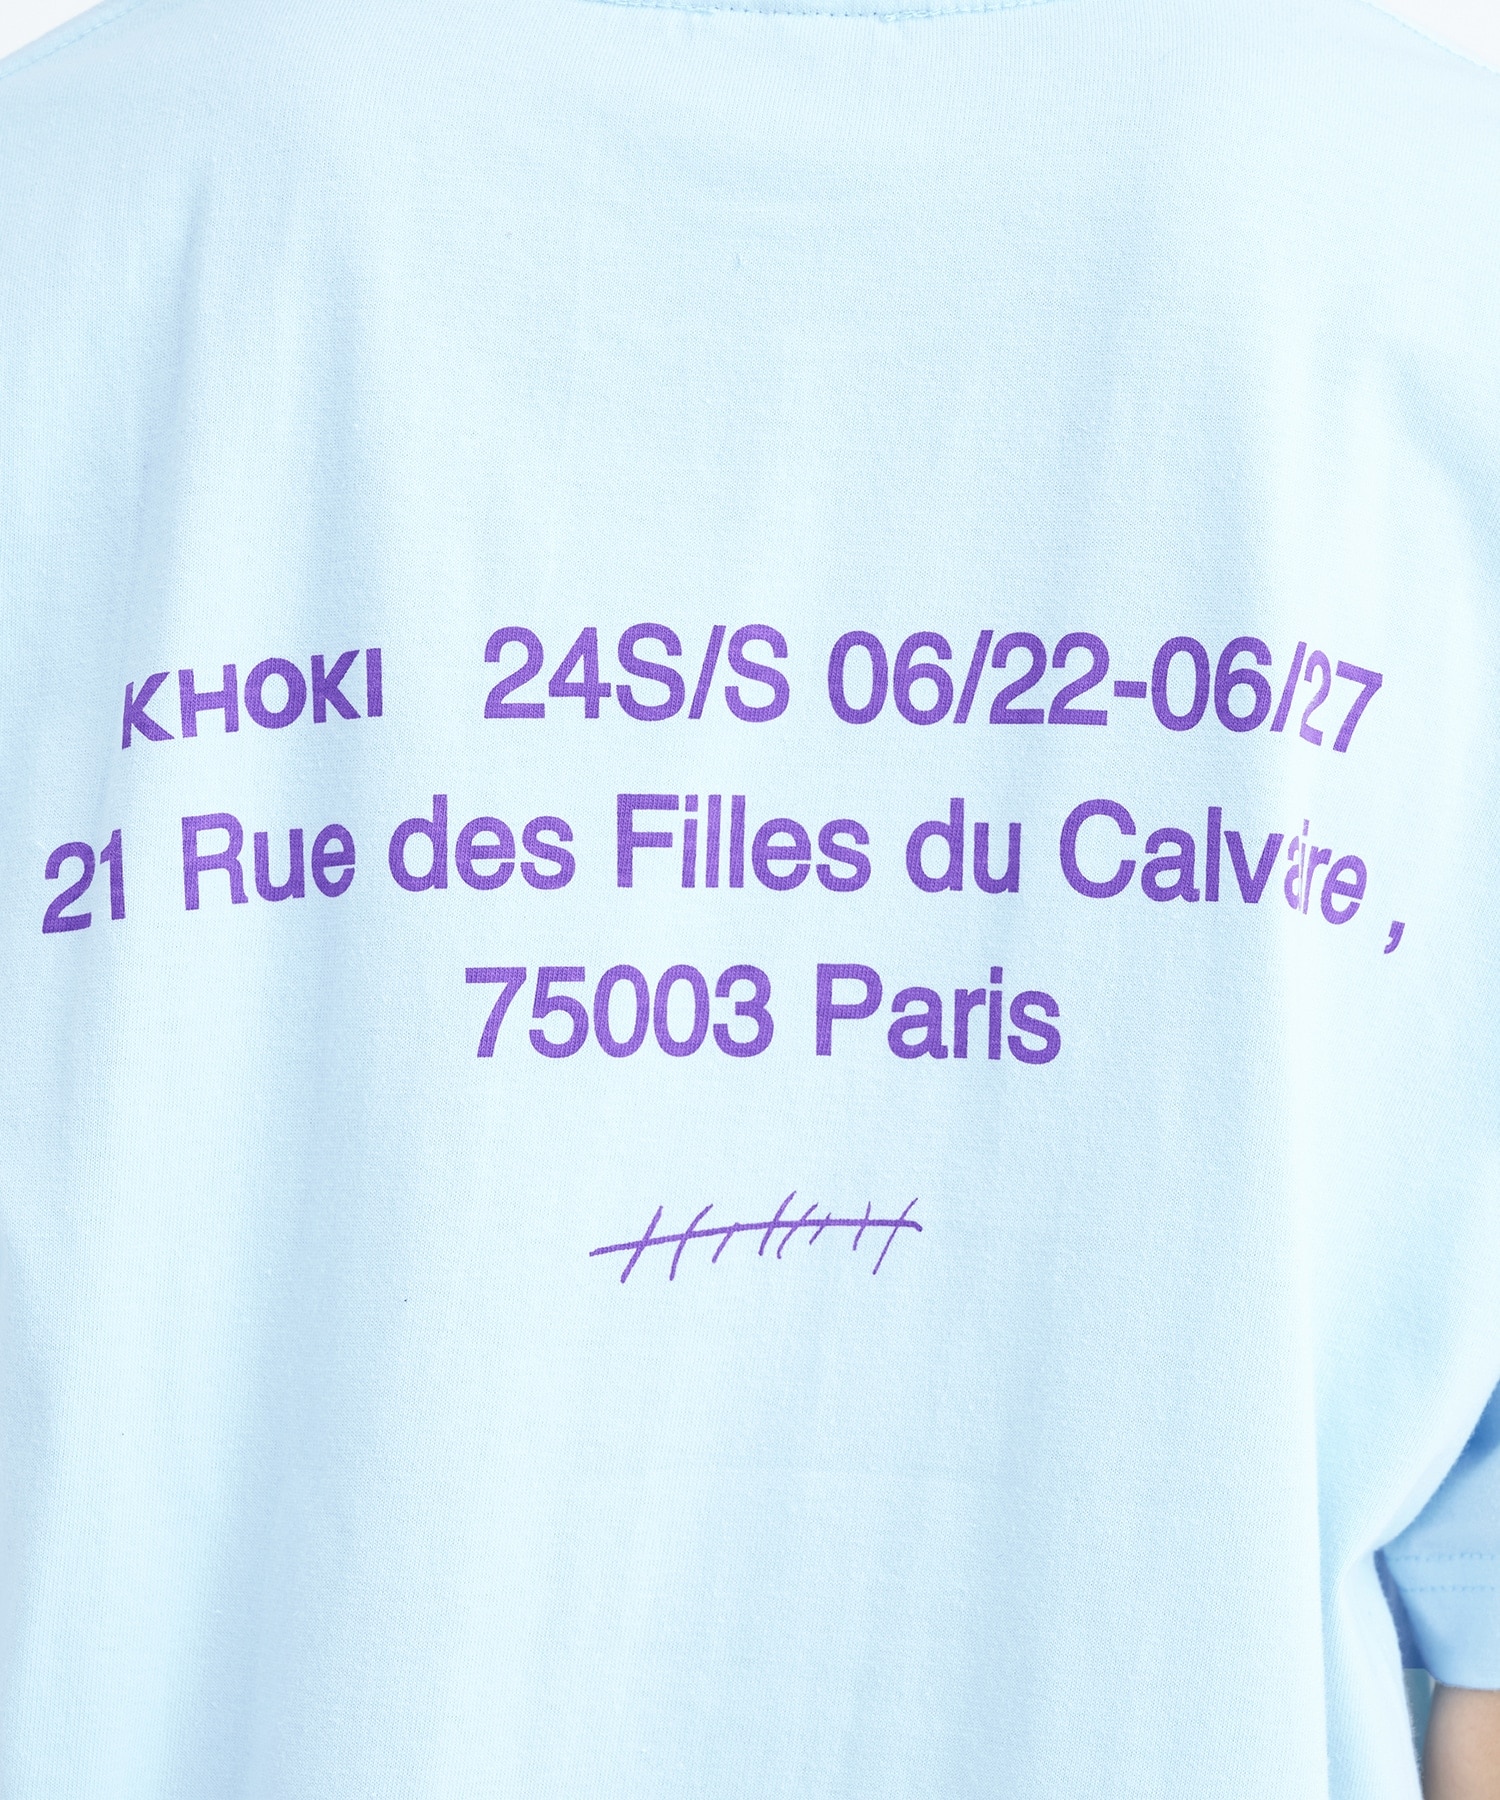 Where is the exhibition T-shirt KHOKI